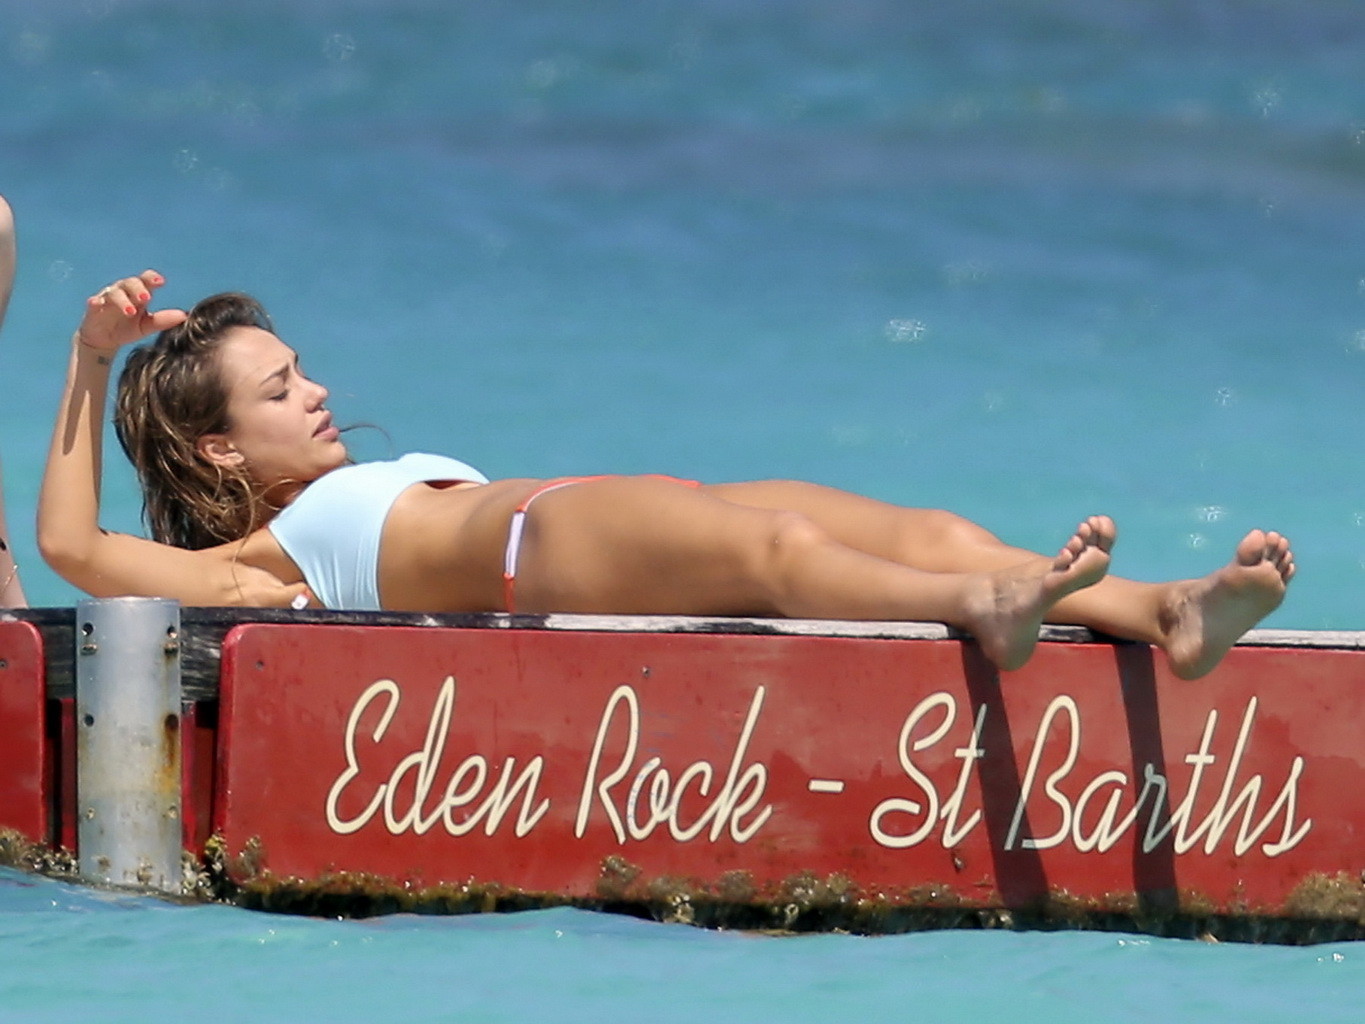 Jessica alba exhibant son corps en bikini sur une plage de st. barts
 #79486749